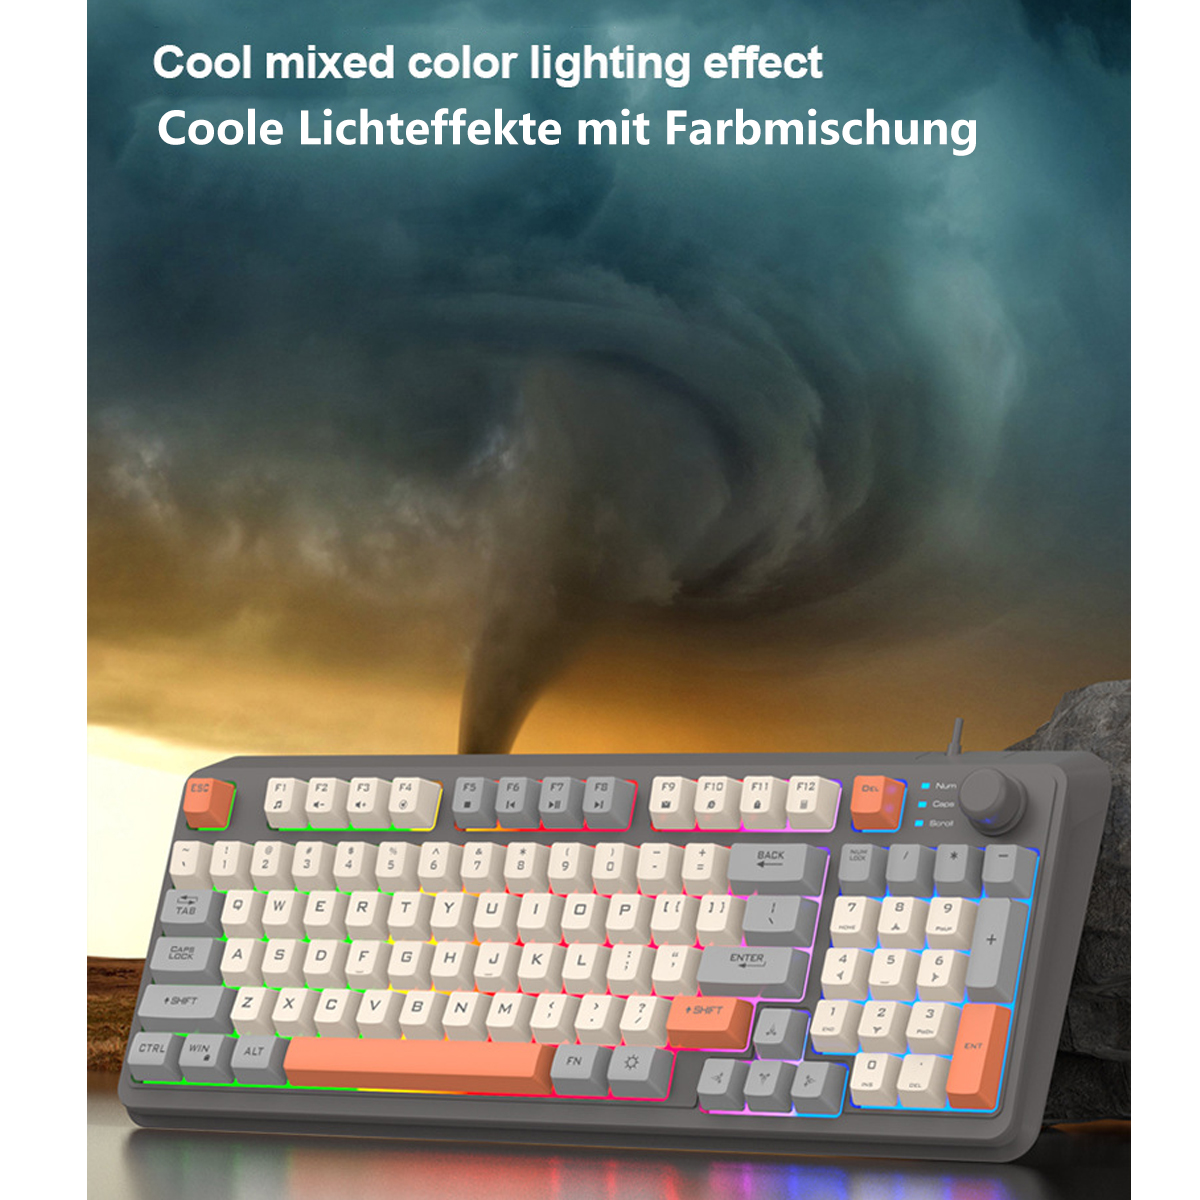 SYNTEK Membrantastatur Triple Patchwork Farbe Tastatur, Mechanische Tasten 94 Feel Layout, Mechanical Tastatur hintergrundbeleuchtet